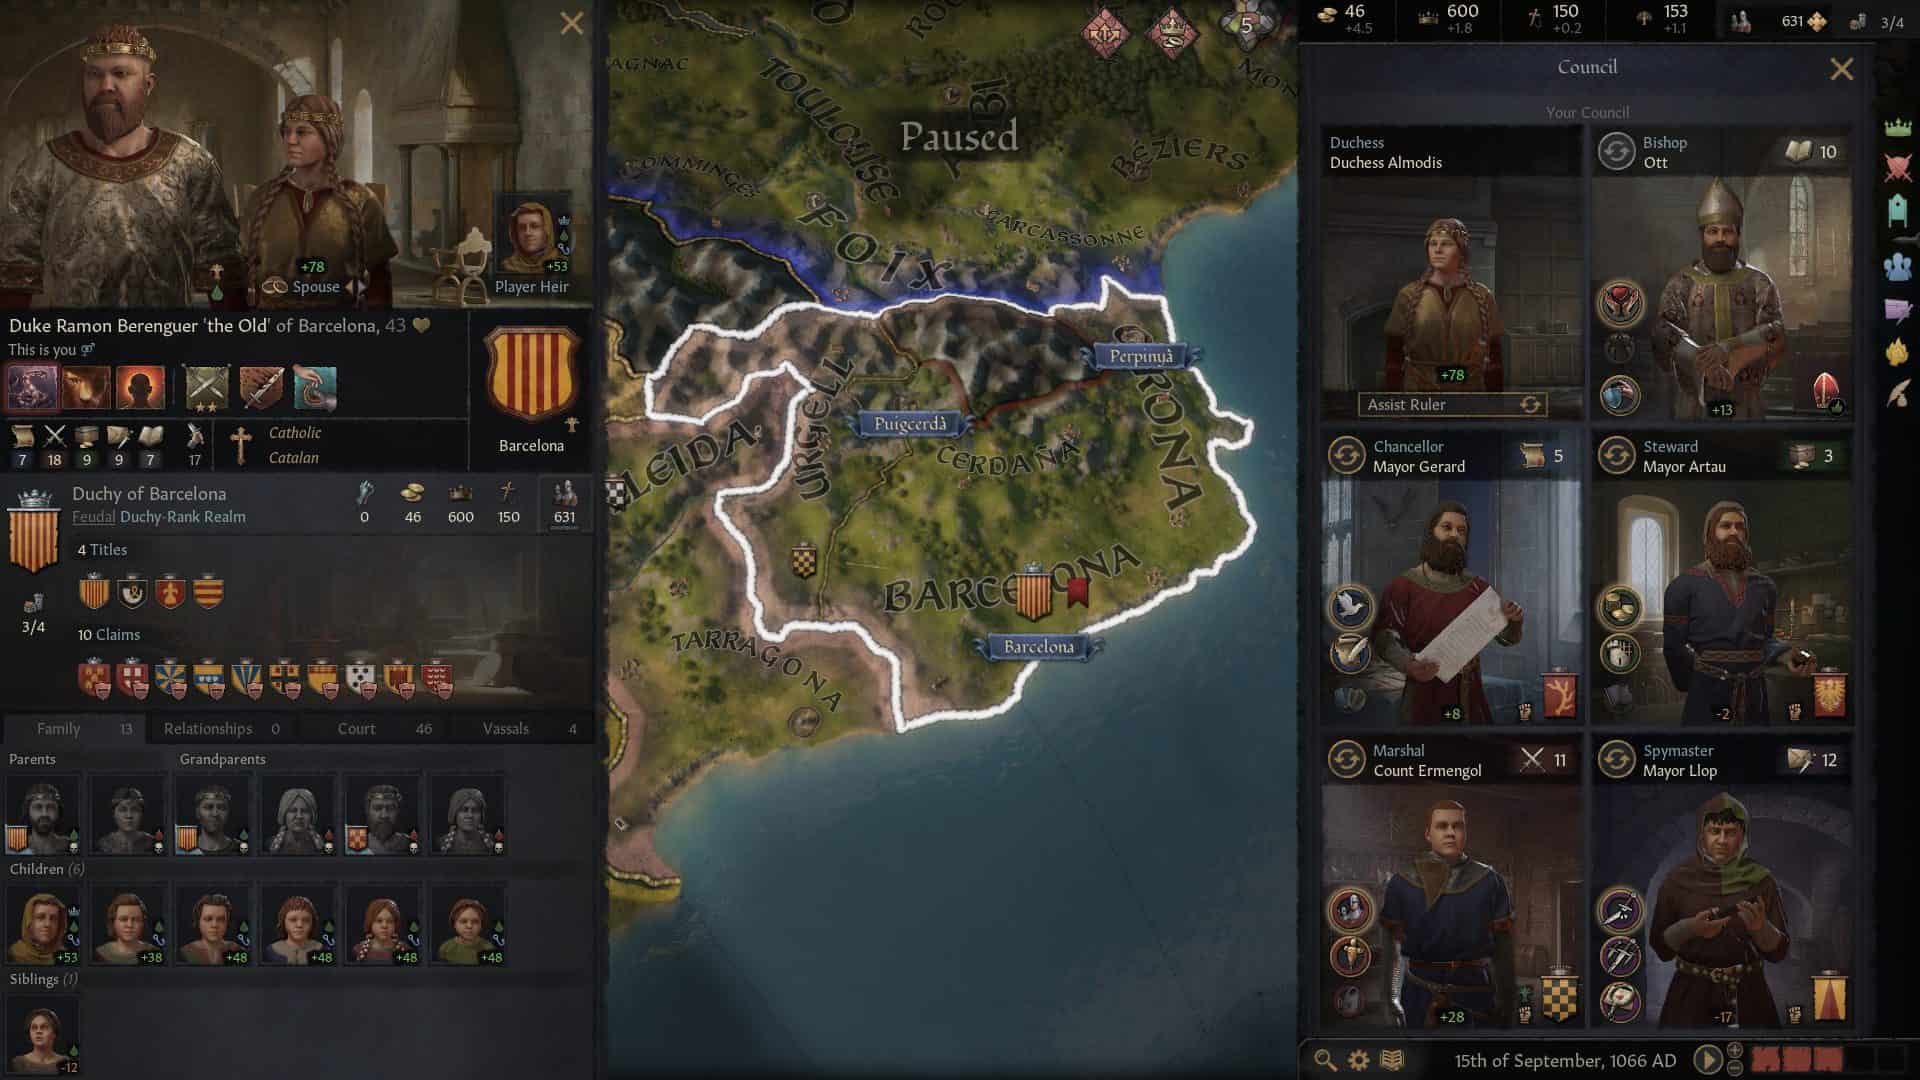 Crusader Kings III maps and characters